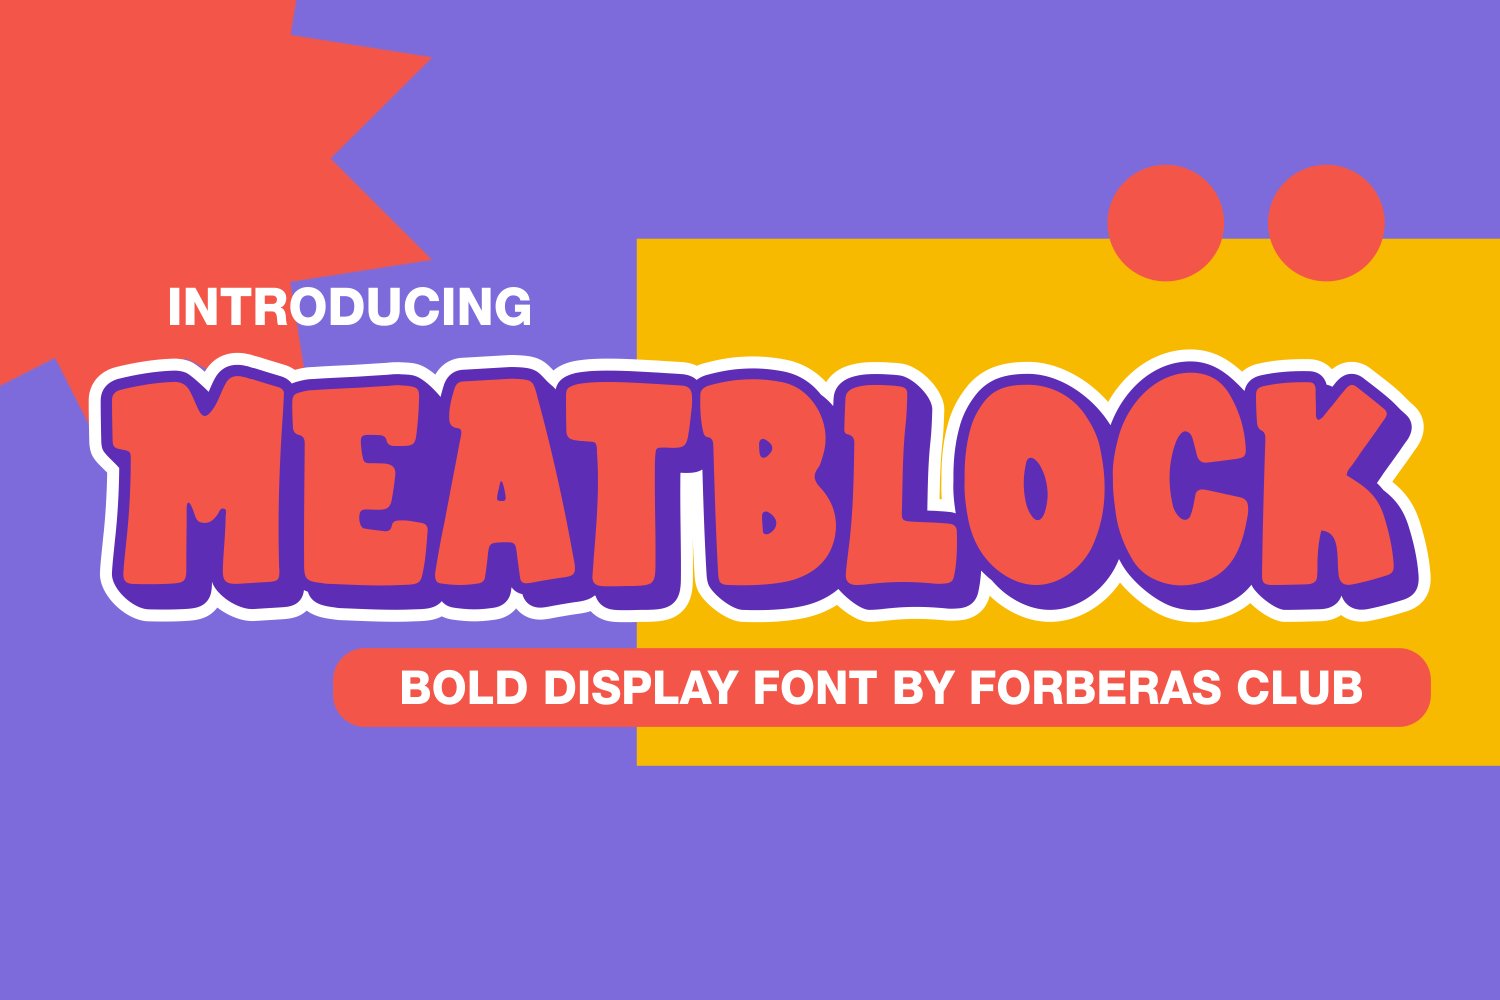 Meatblock | Bold Display Font cover image.